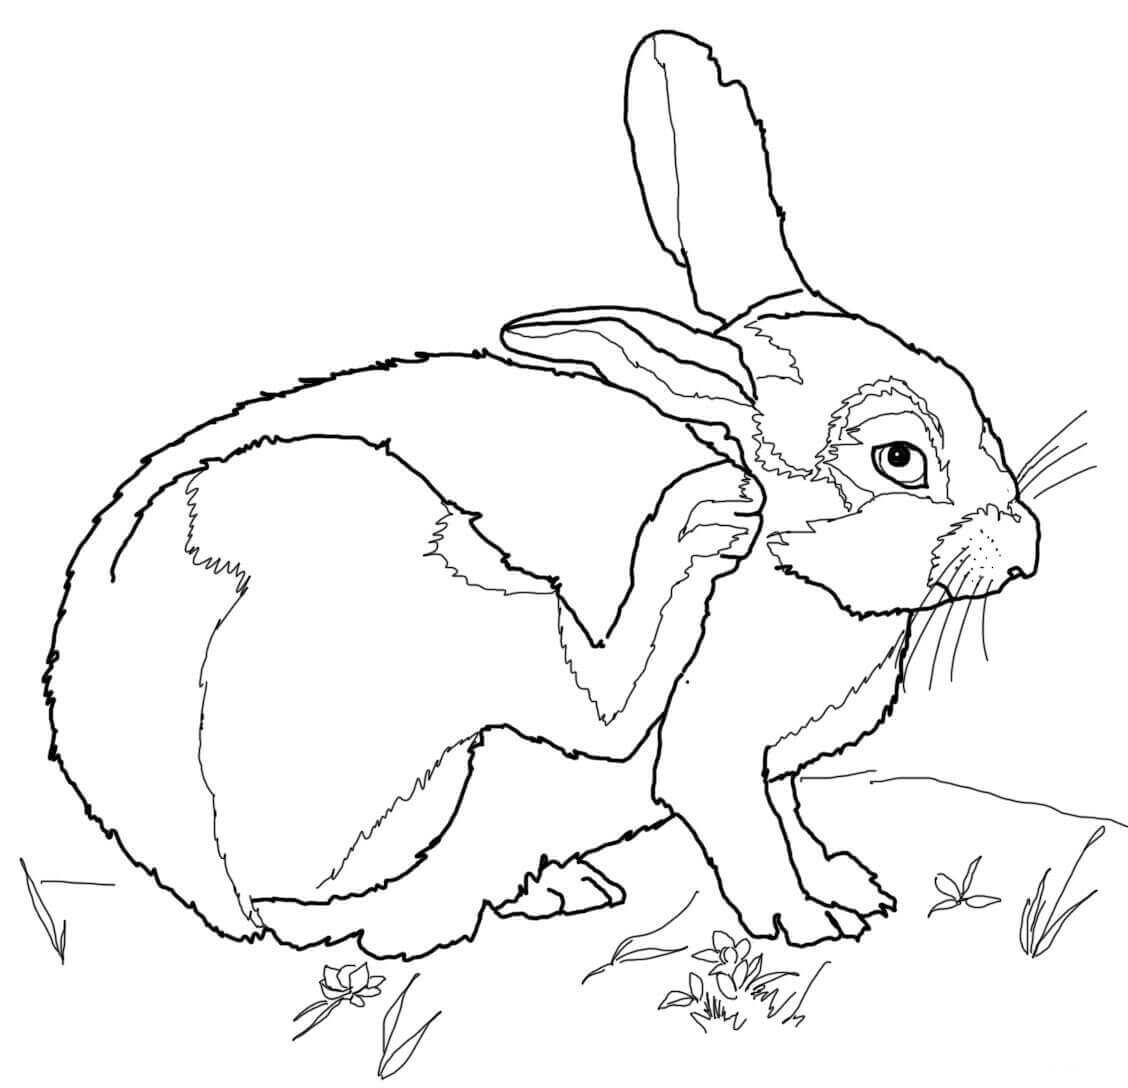 Grande coelho de coelho levanta a perna de Bunny